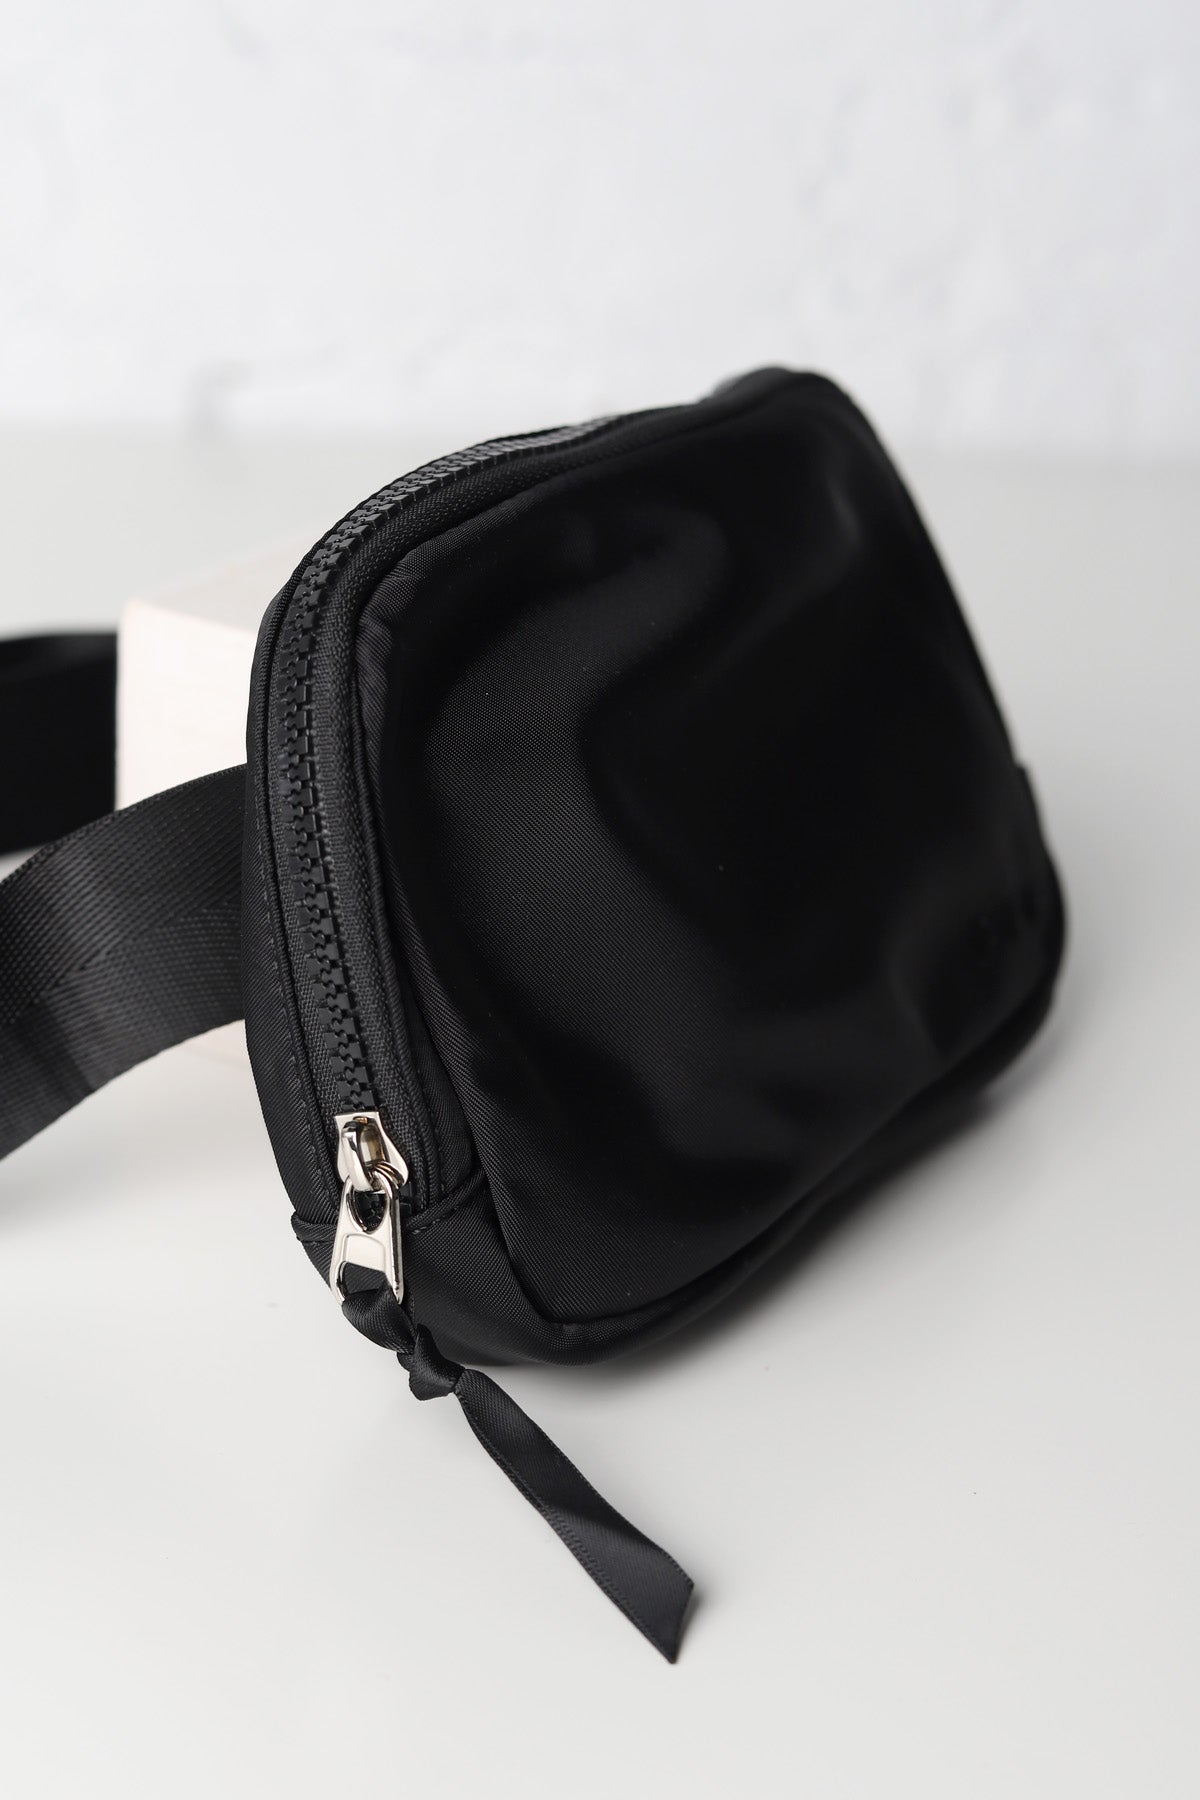 Nadya Black Nylon Bum Bag